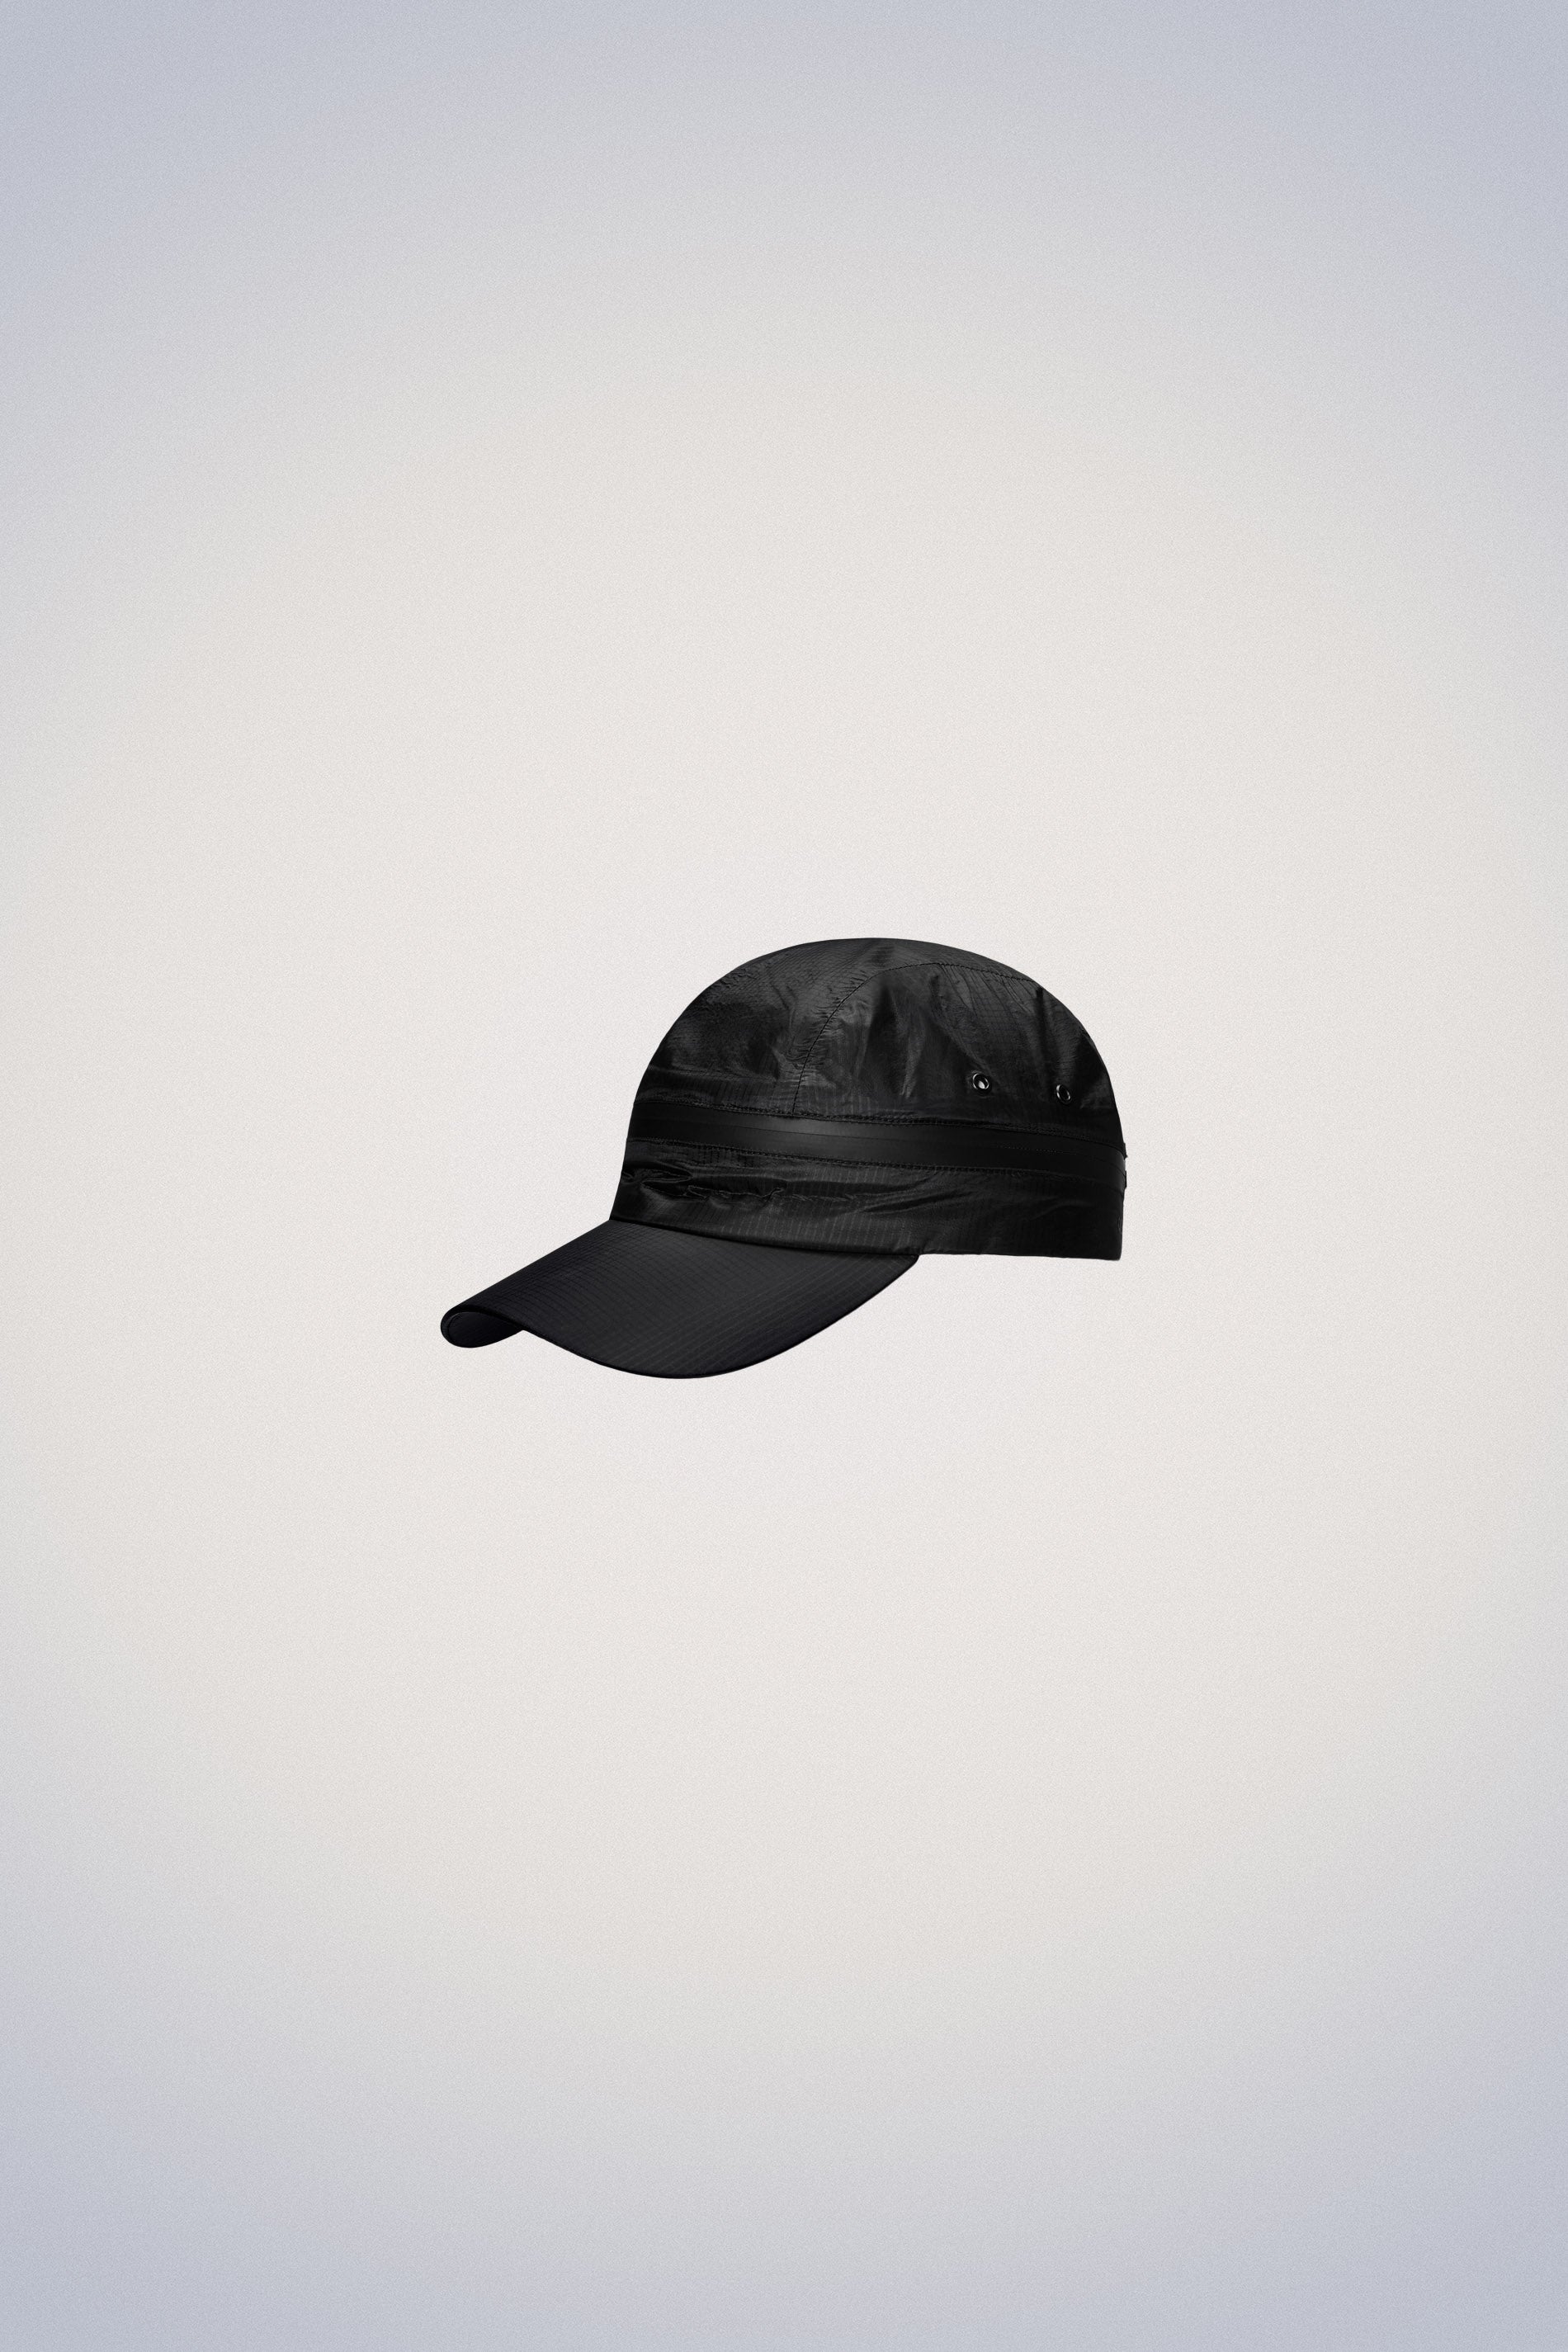 Waterproof rain hat, nylon, black, size M